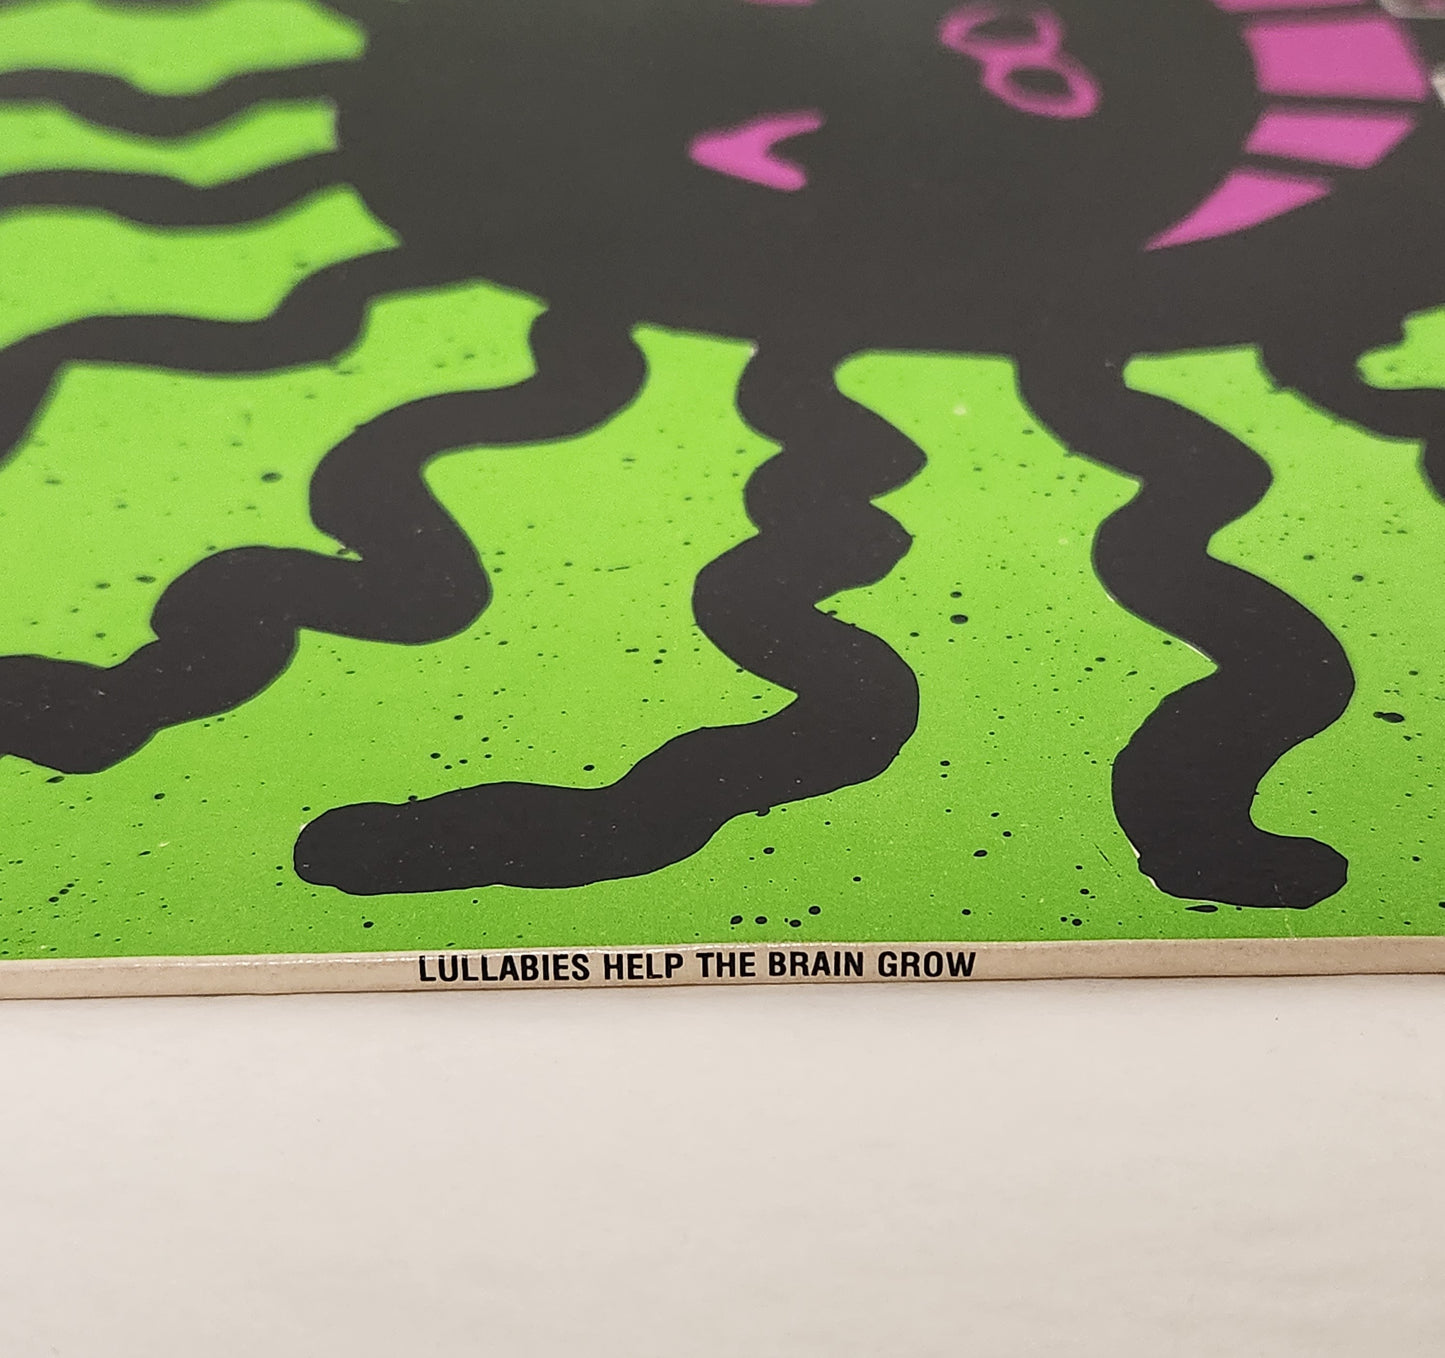 Big Boys "Lullabies Help The Brain Grow" 1983 Punk / Alt Rock Record Album